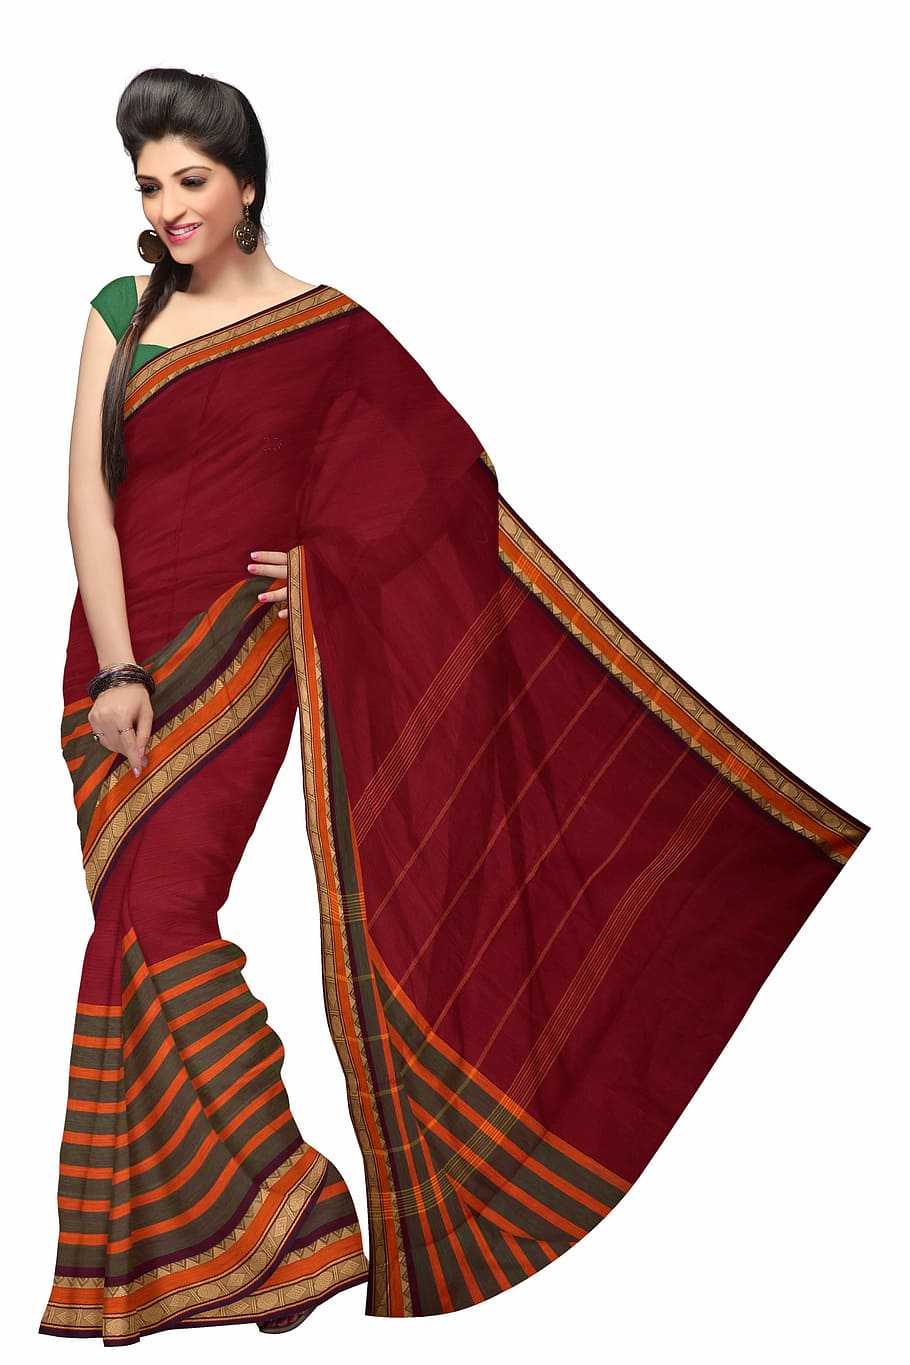 wearing, red, orange, green, sari dress, Fashion, Silk, Dress, Woman, Model